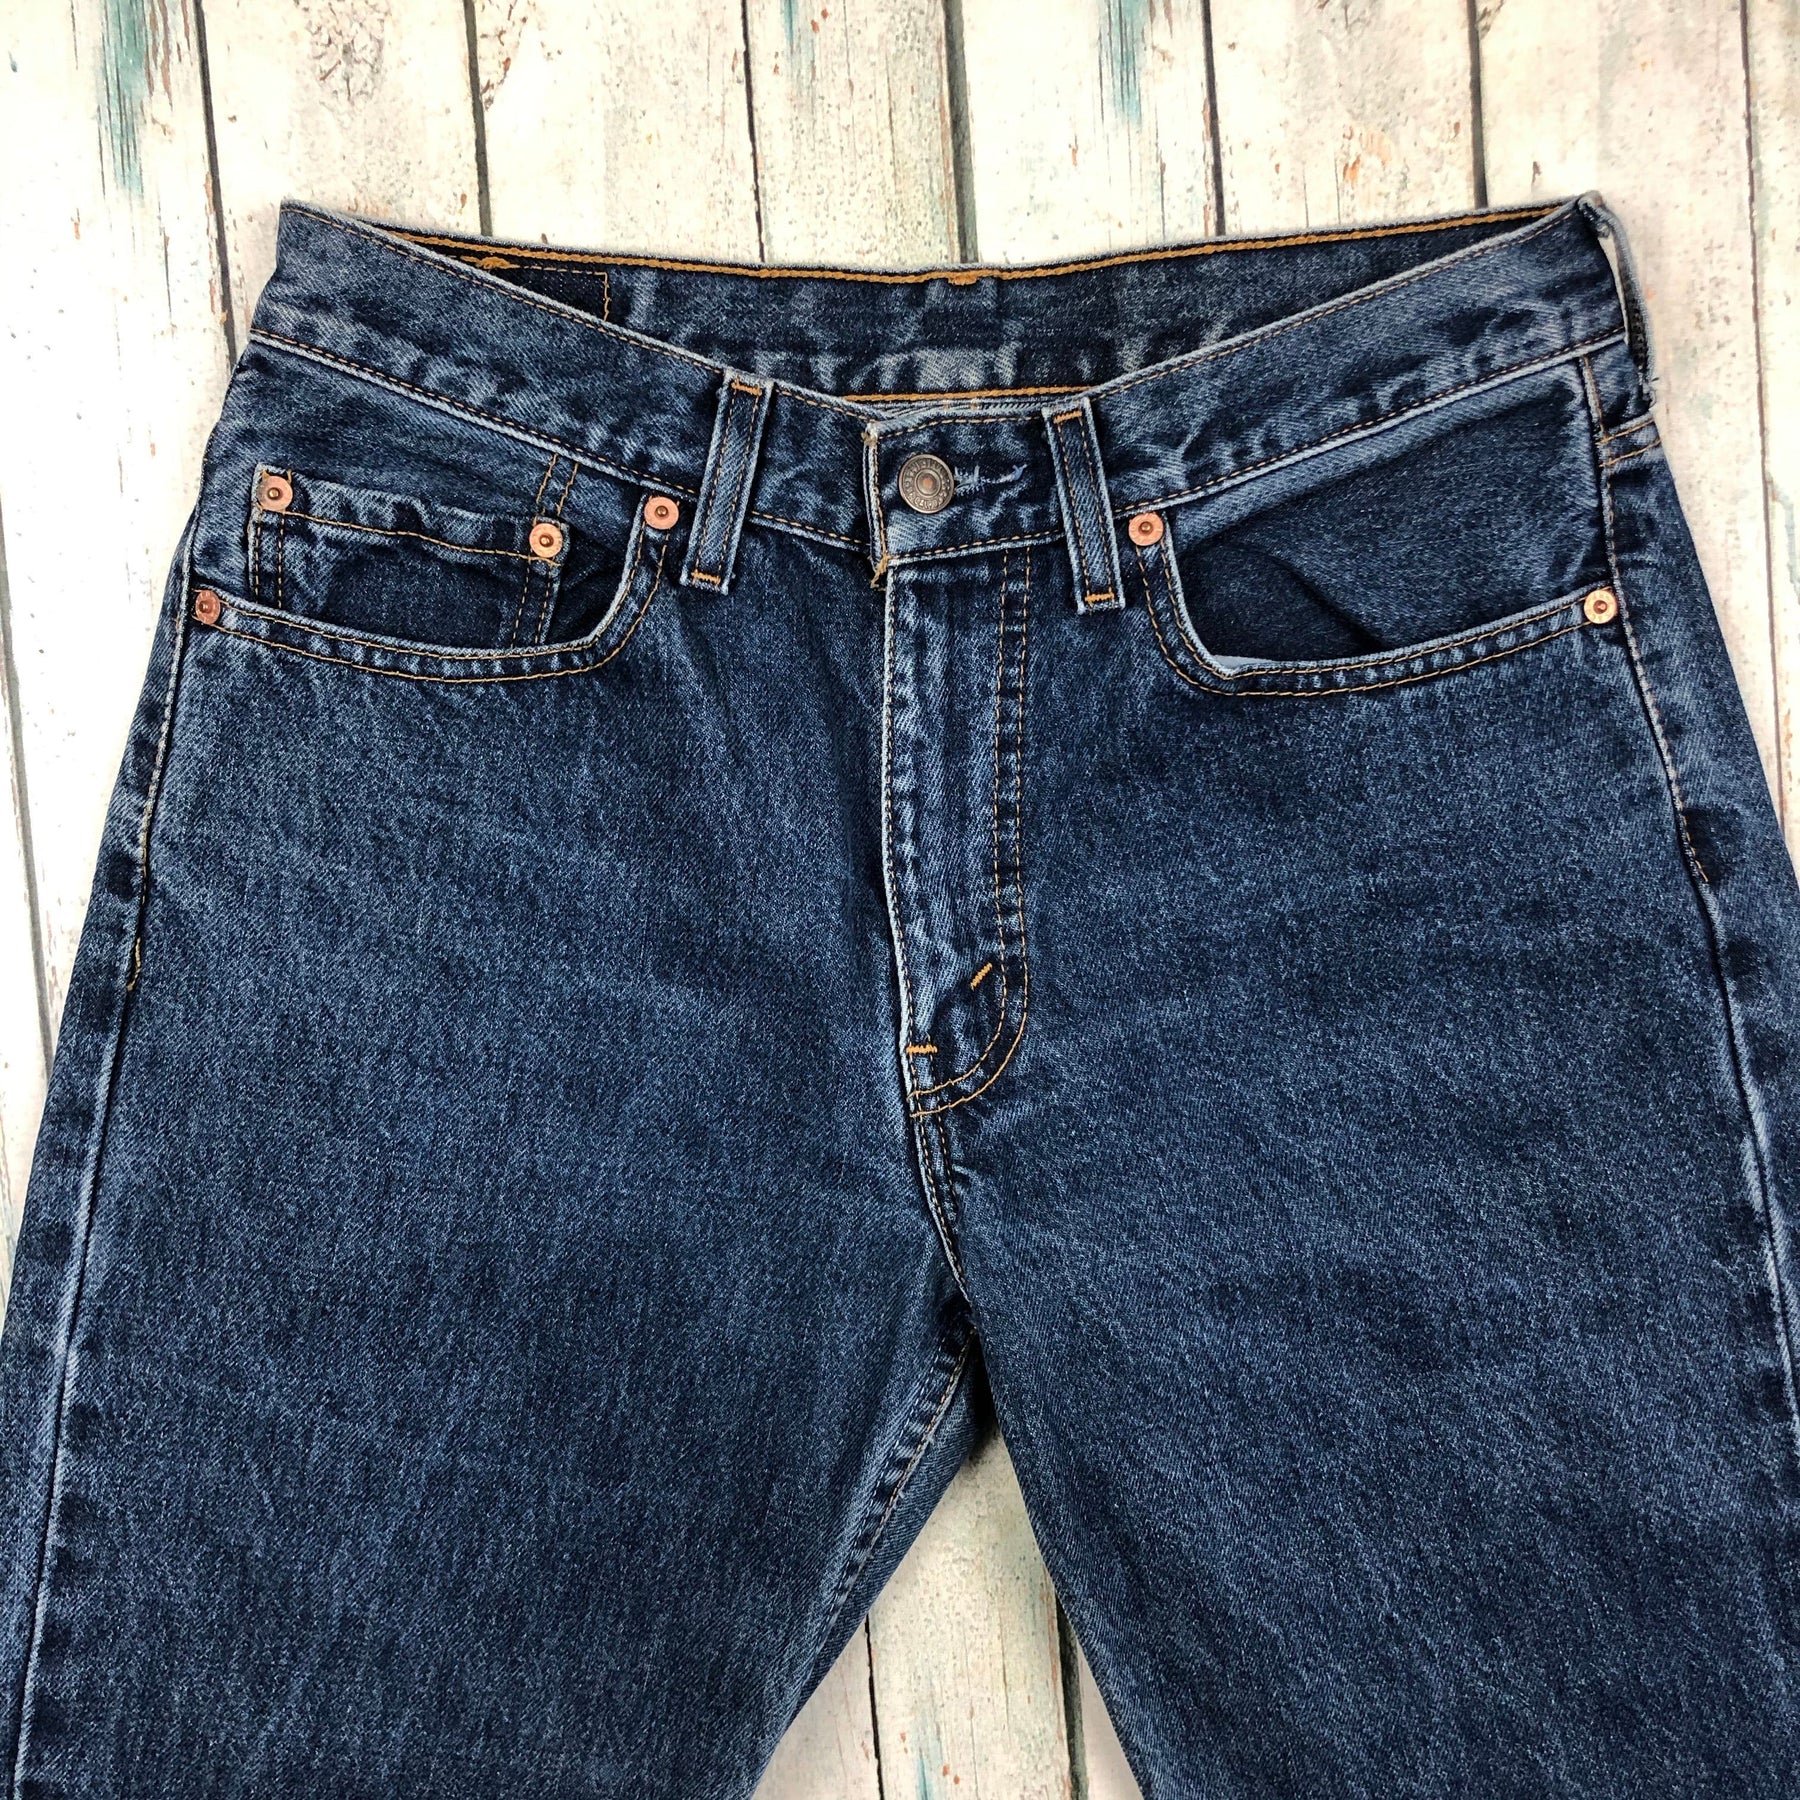 Vintage 1990's Australian Made Levis 553 Jeans - Size 30/33 – Jean Pool